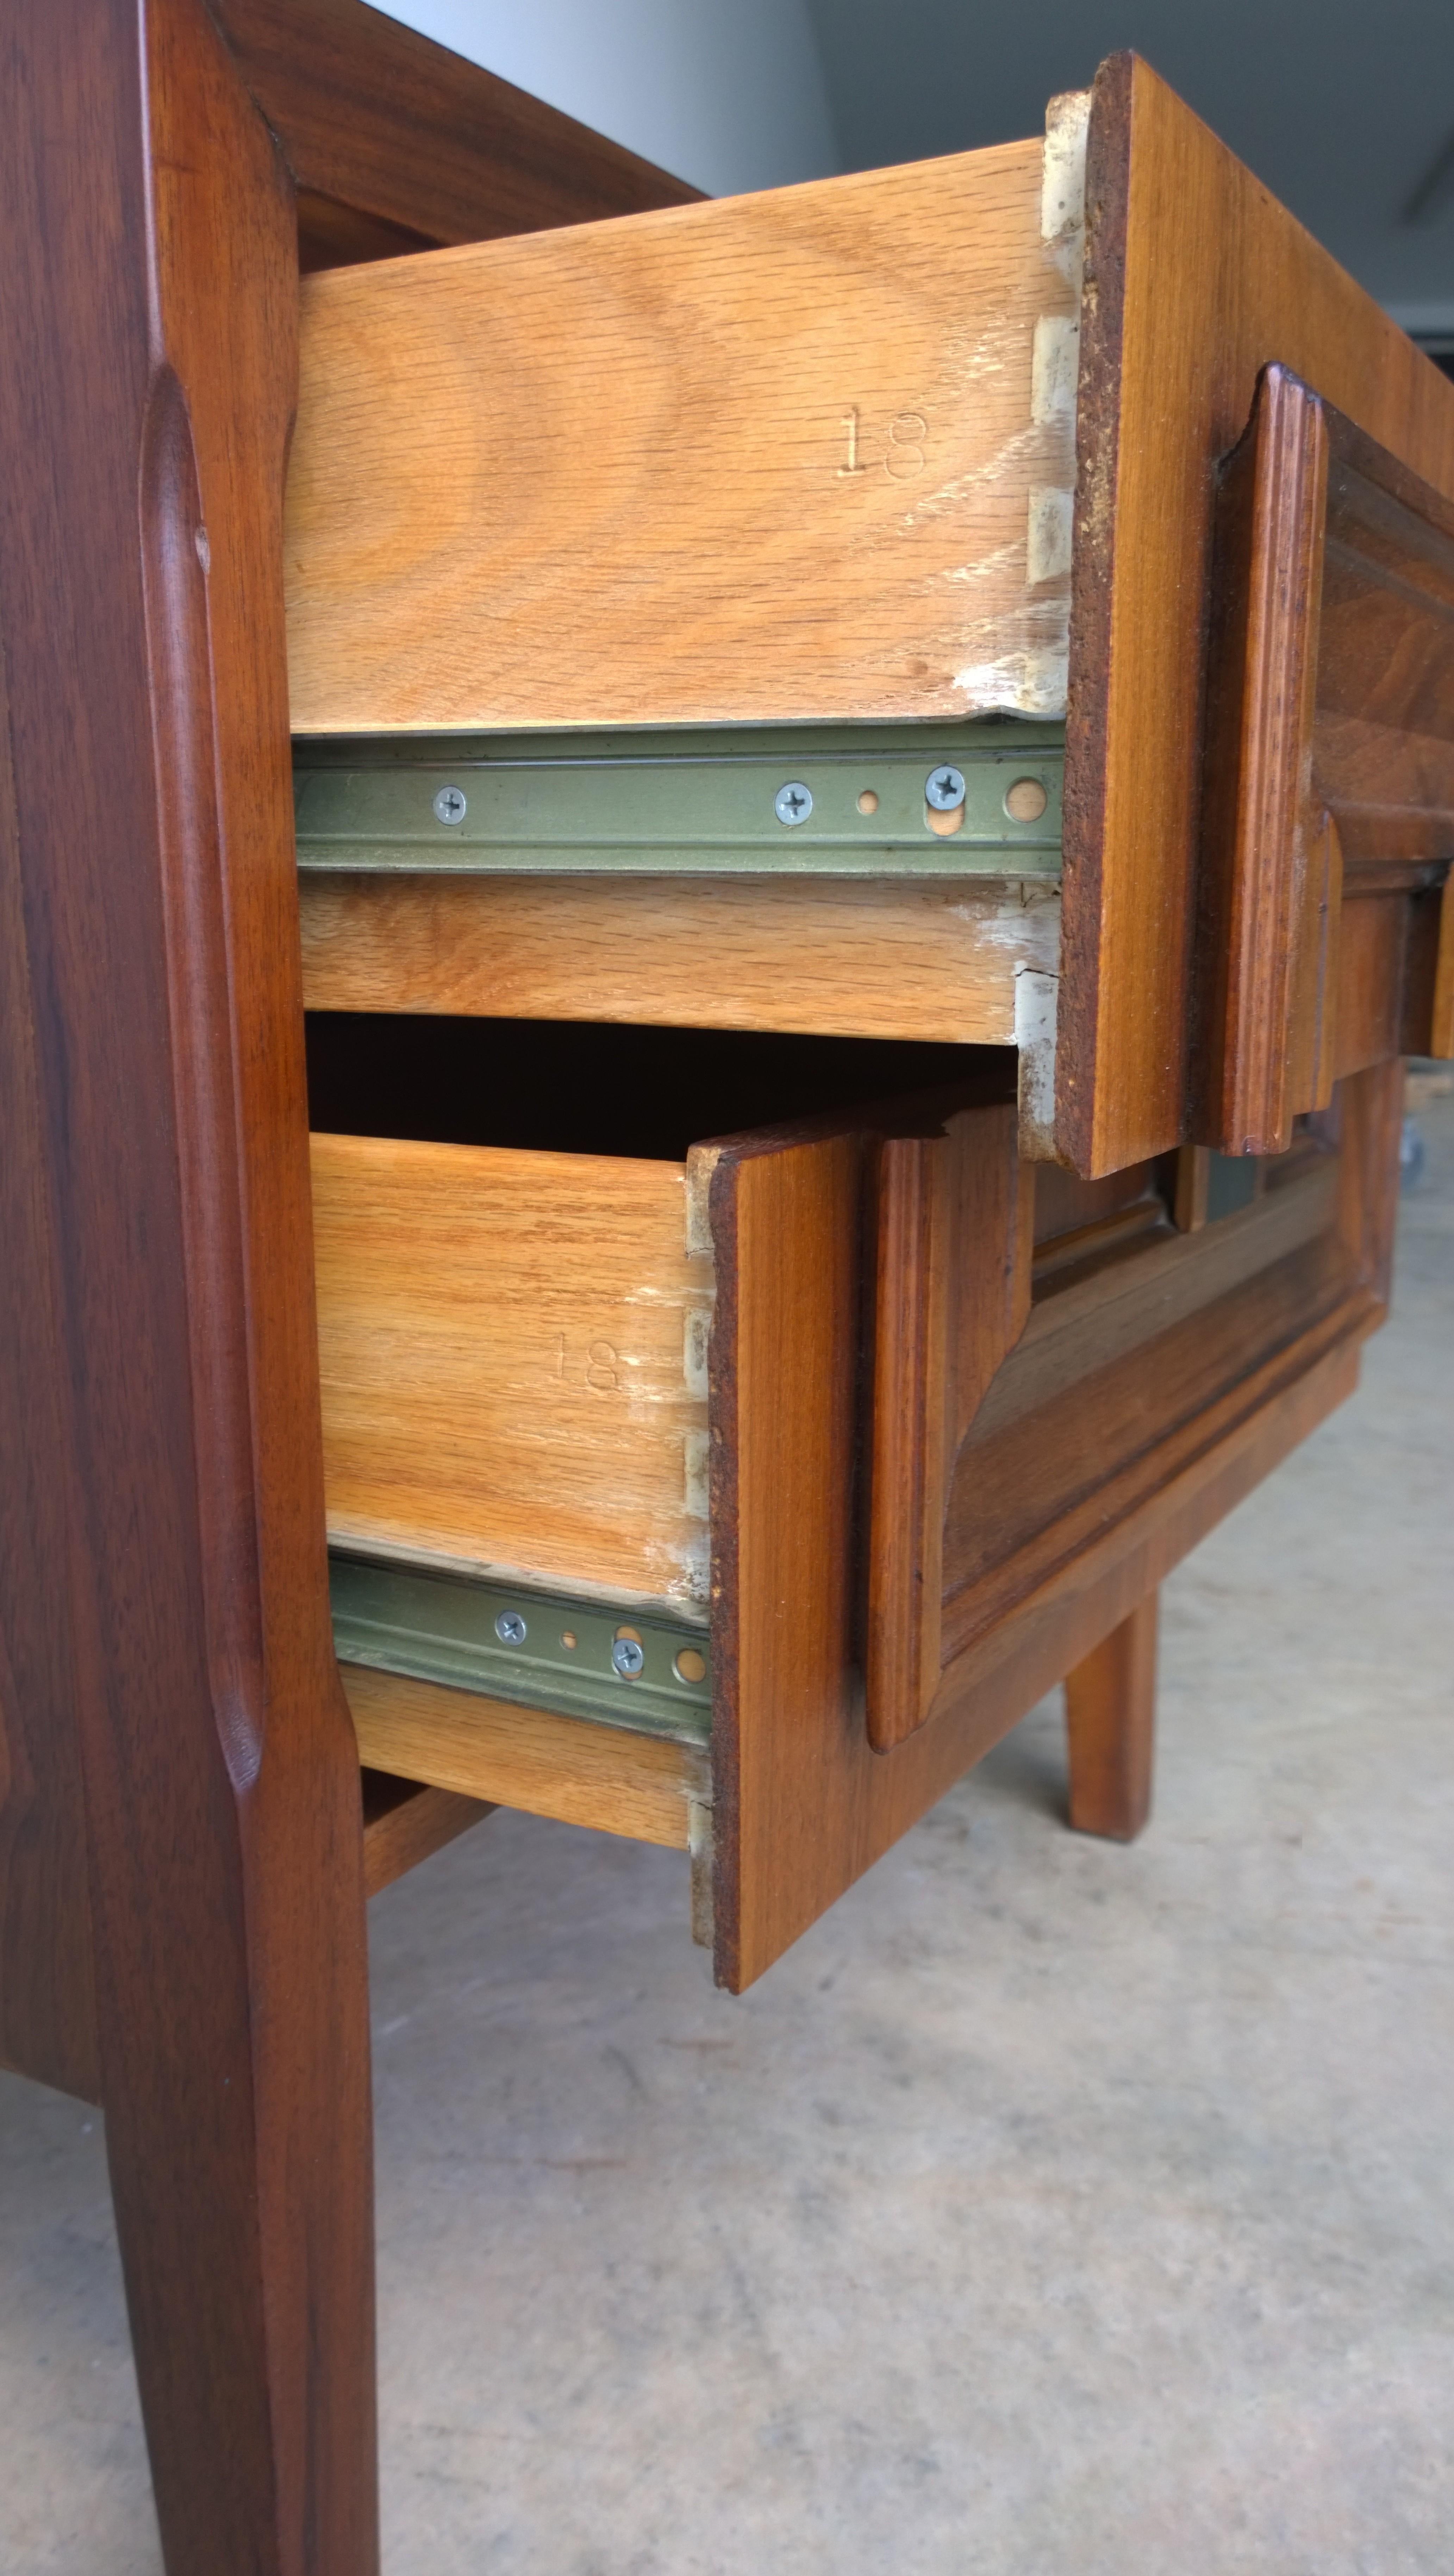 American Walnut Veneer & Burl Wood Bedside Nightstands / Bedside Tables / Chest of Drawer